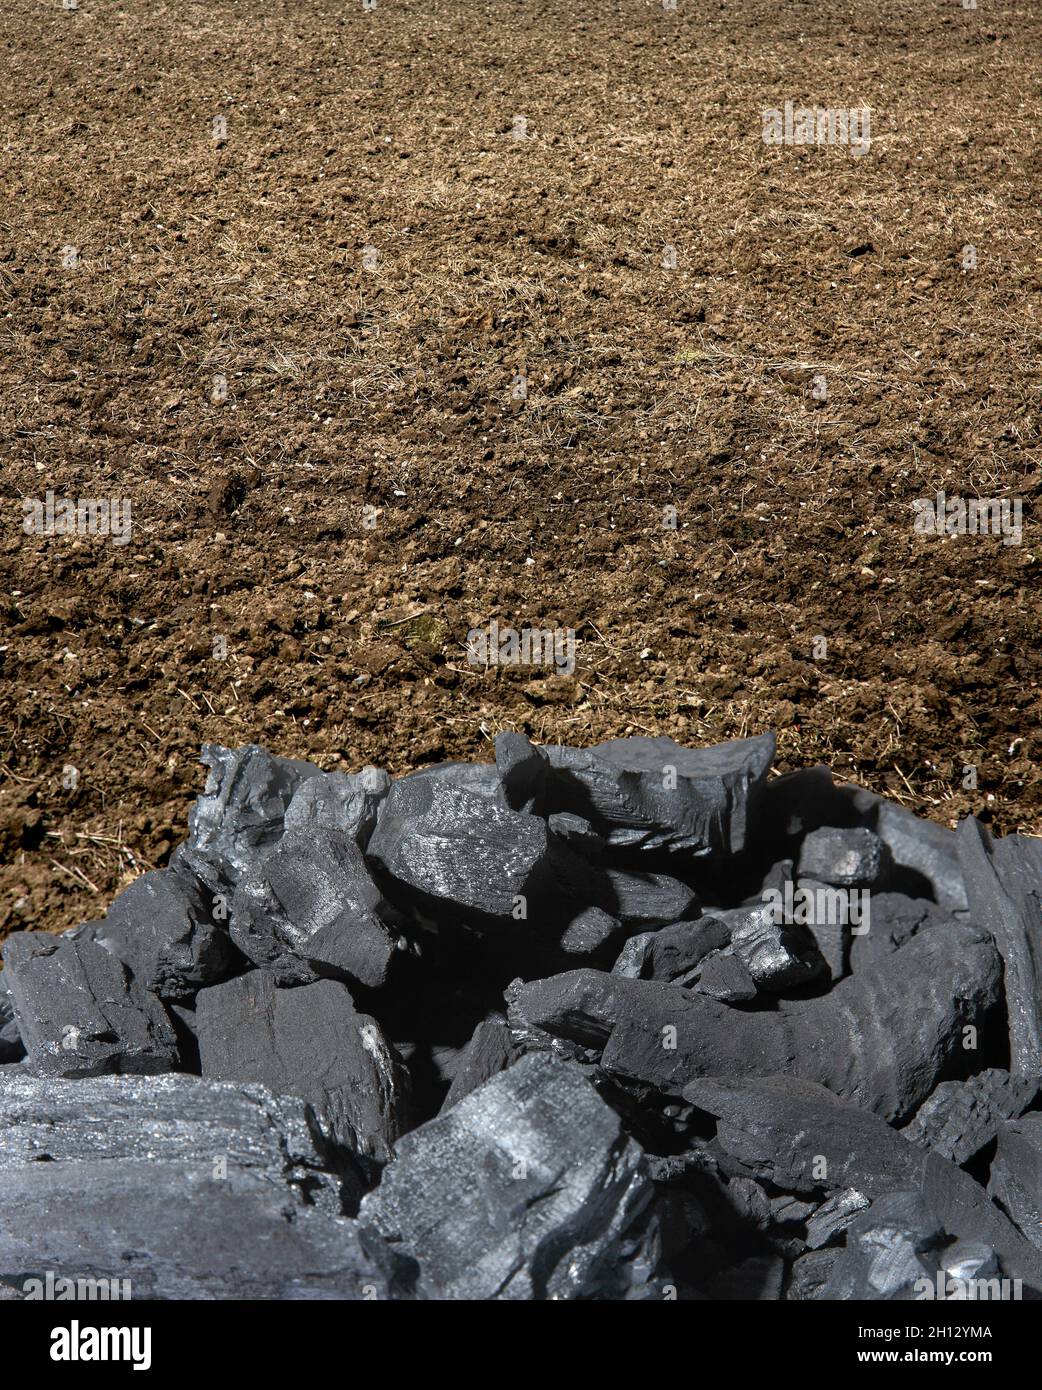 Biochar enhancing soil quality, conceptual image Stock Photo